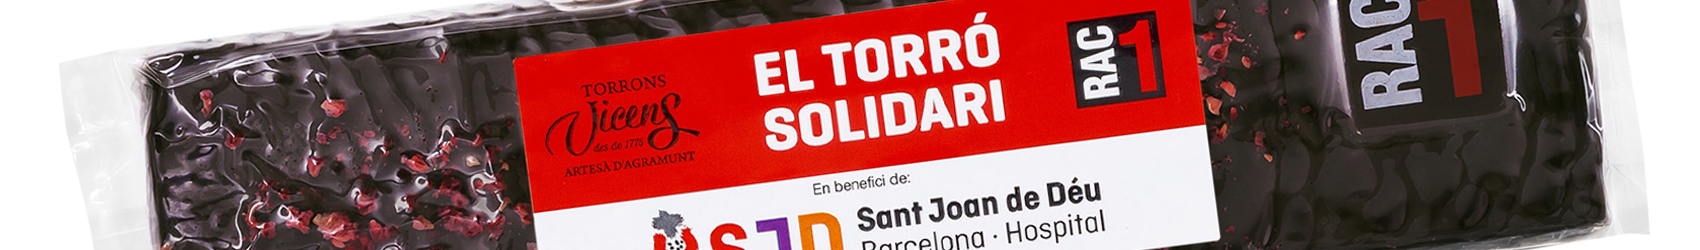 Turrn Solidario RAC1 y Torrons Vicens